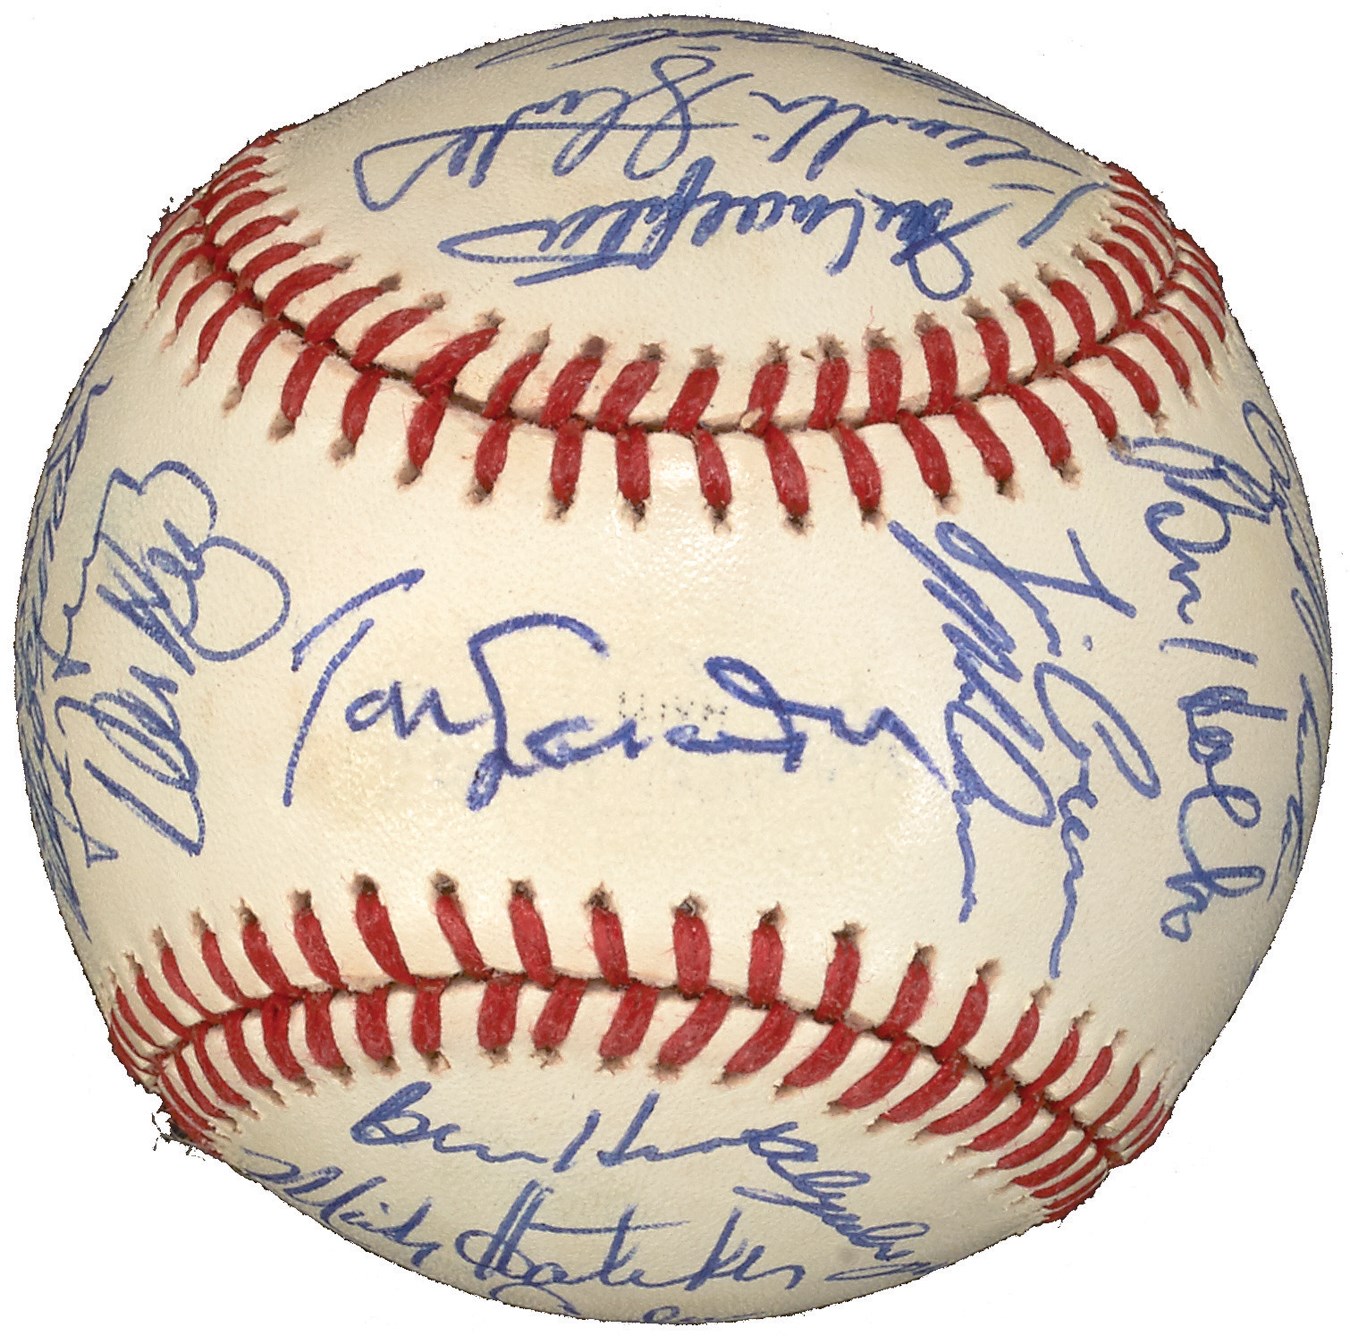 Baseball Autographs - High Grade 1988 Los Angeles Dodgers World Champions Team-Signed Baseball